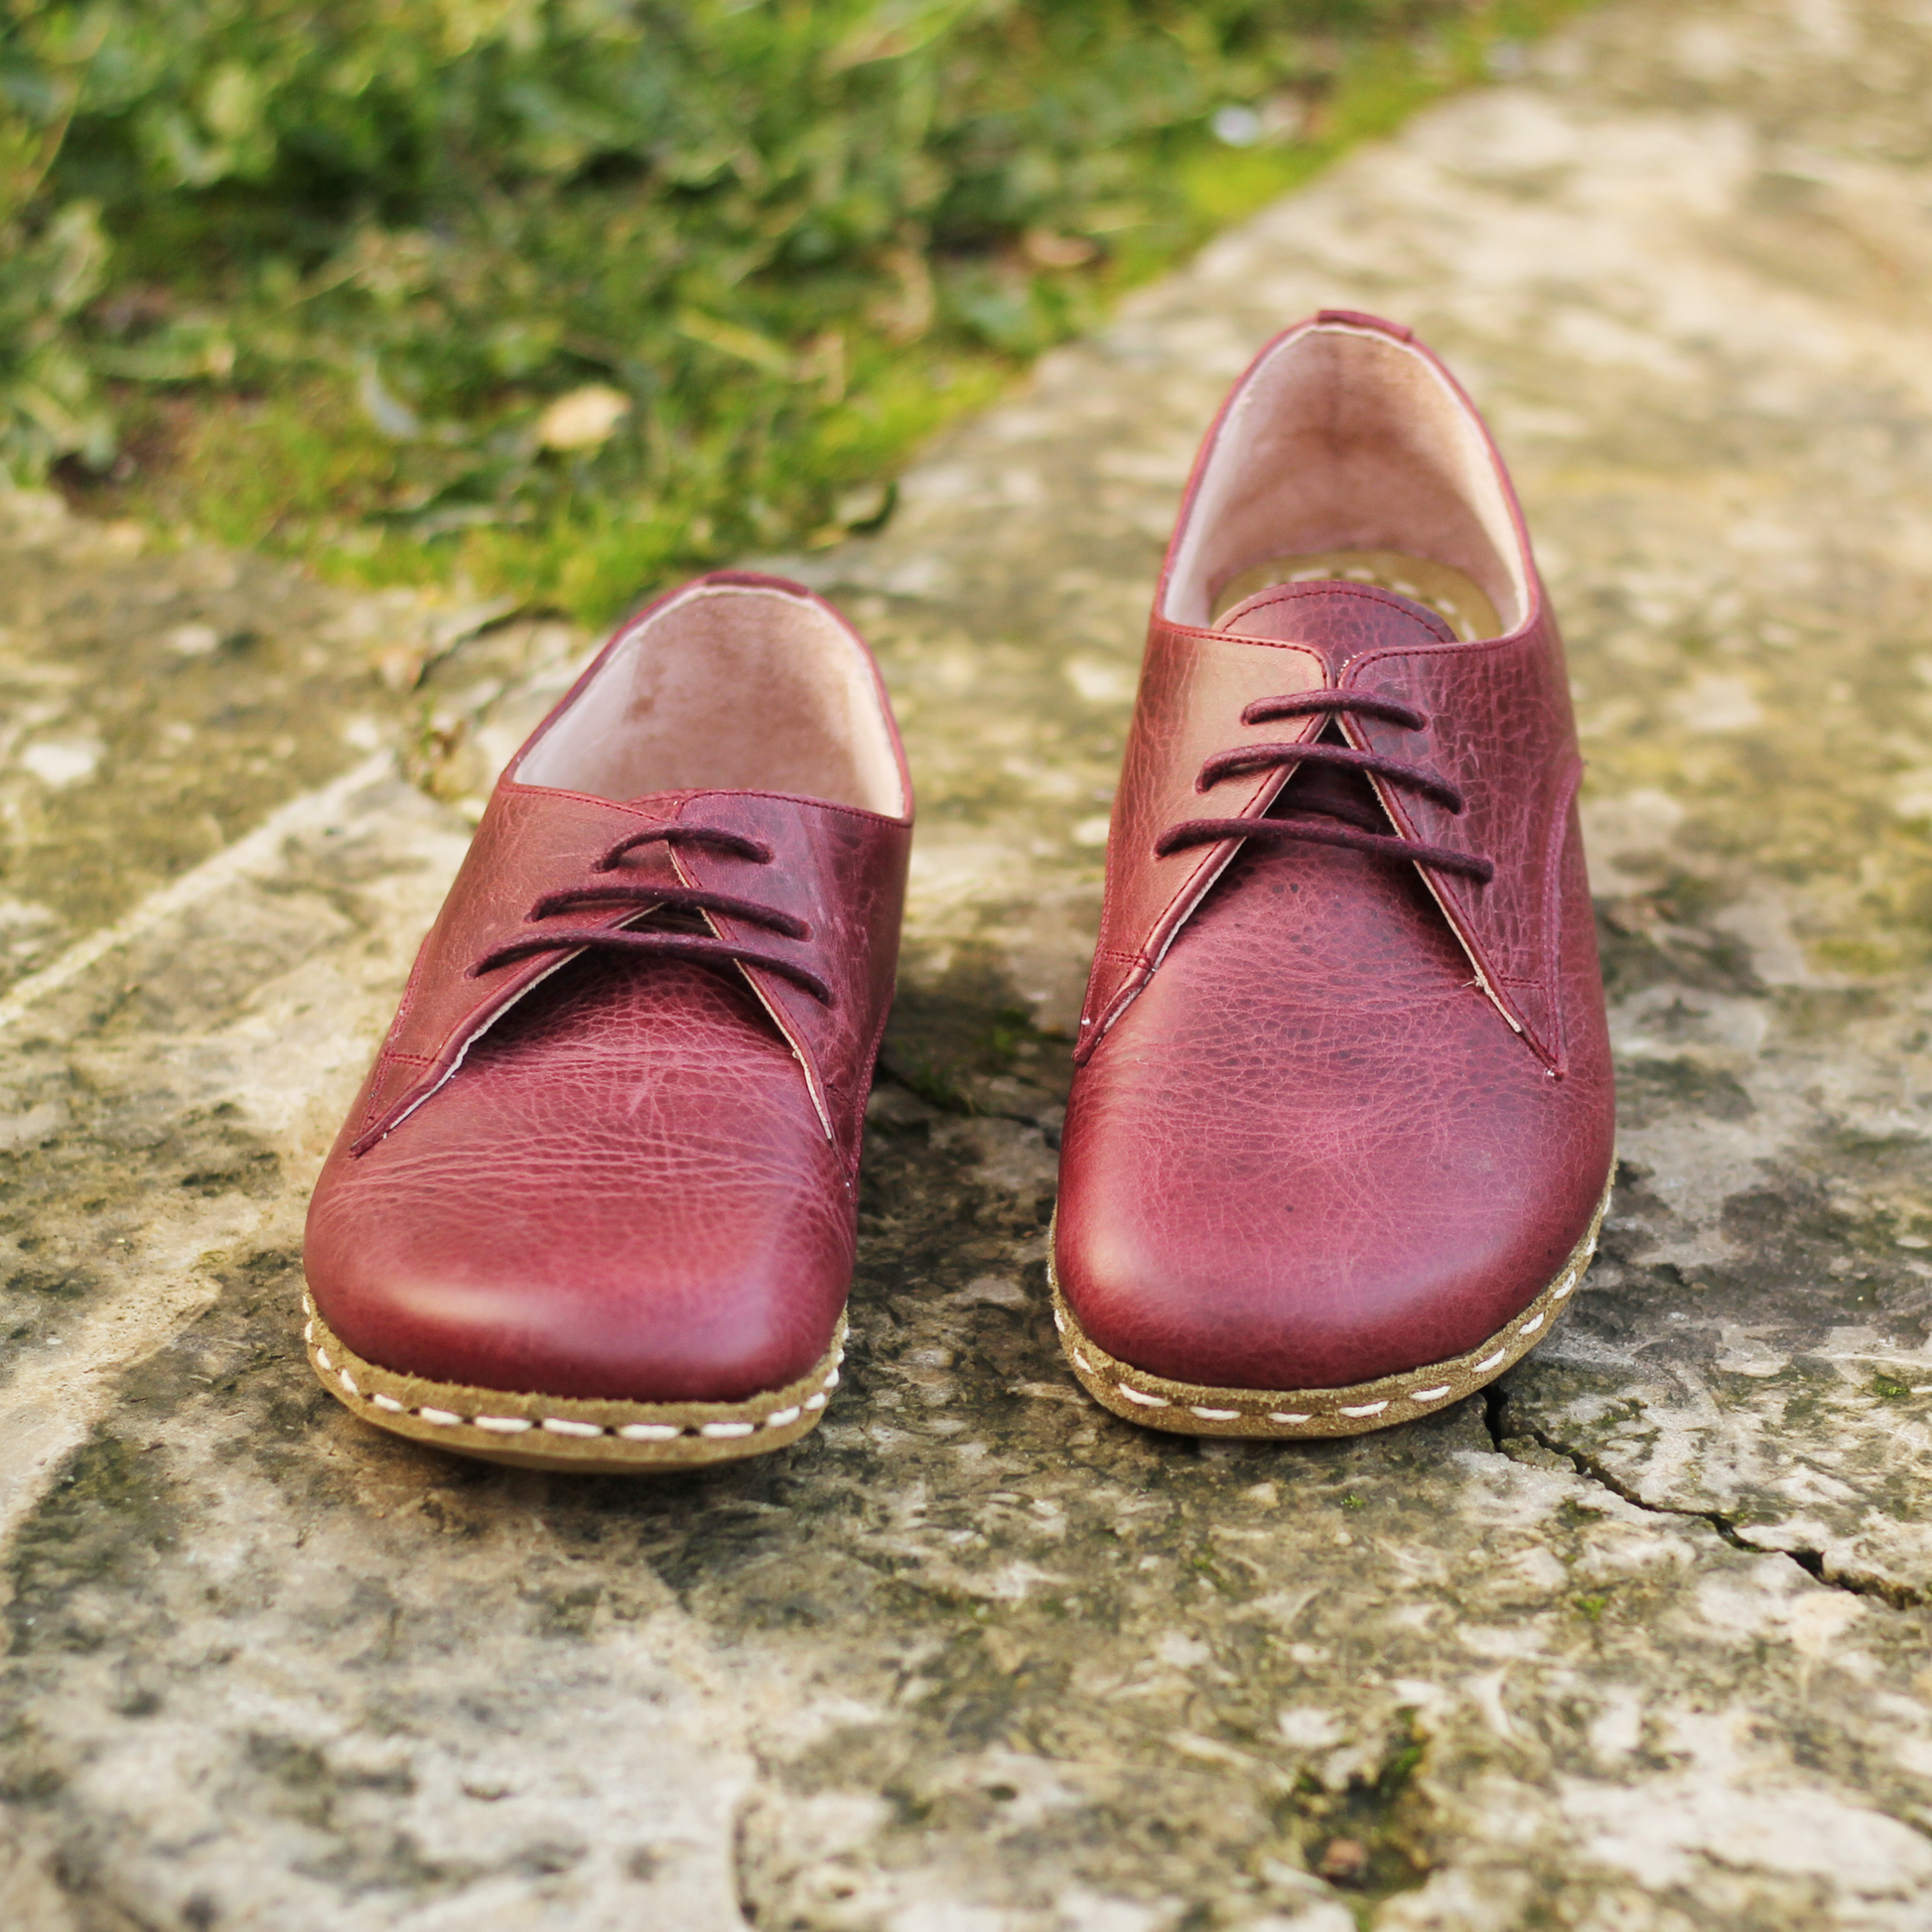 Handmade Crazy Burgundy Leather Barefoot Shoes: Zero Drop Design 9.5